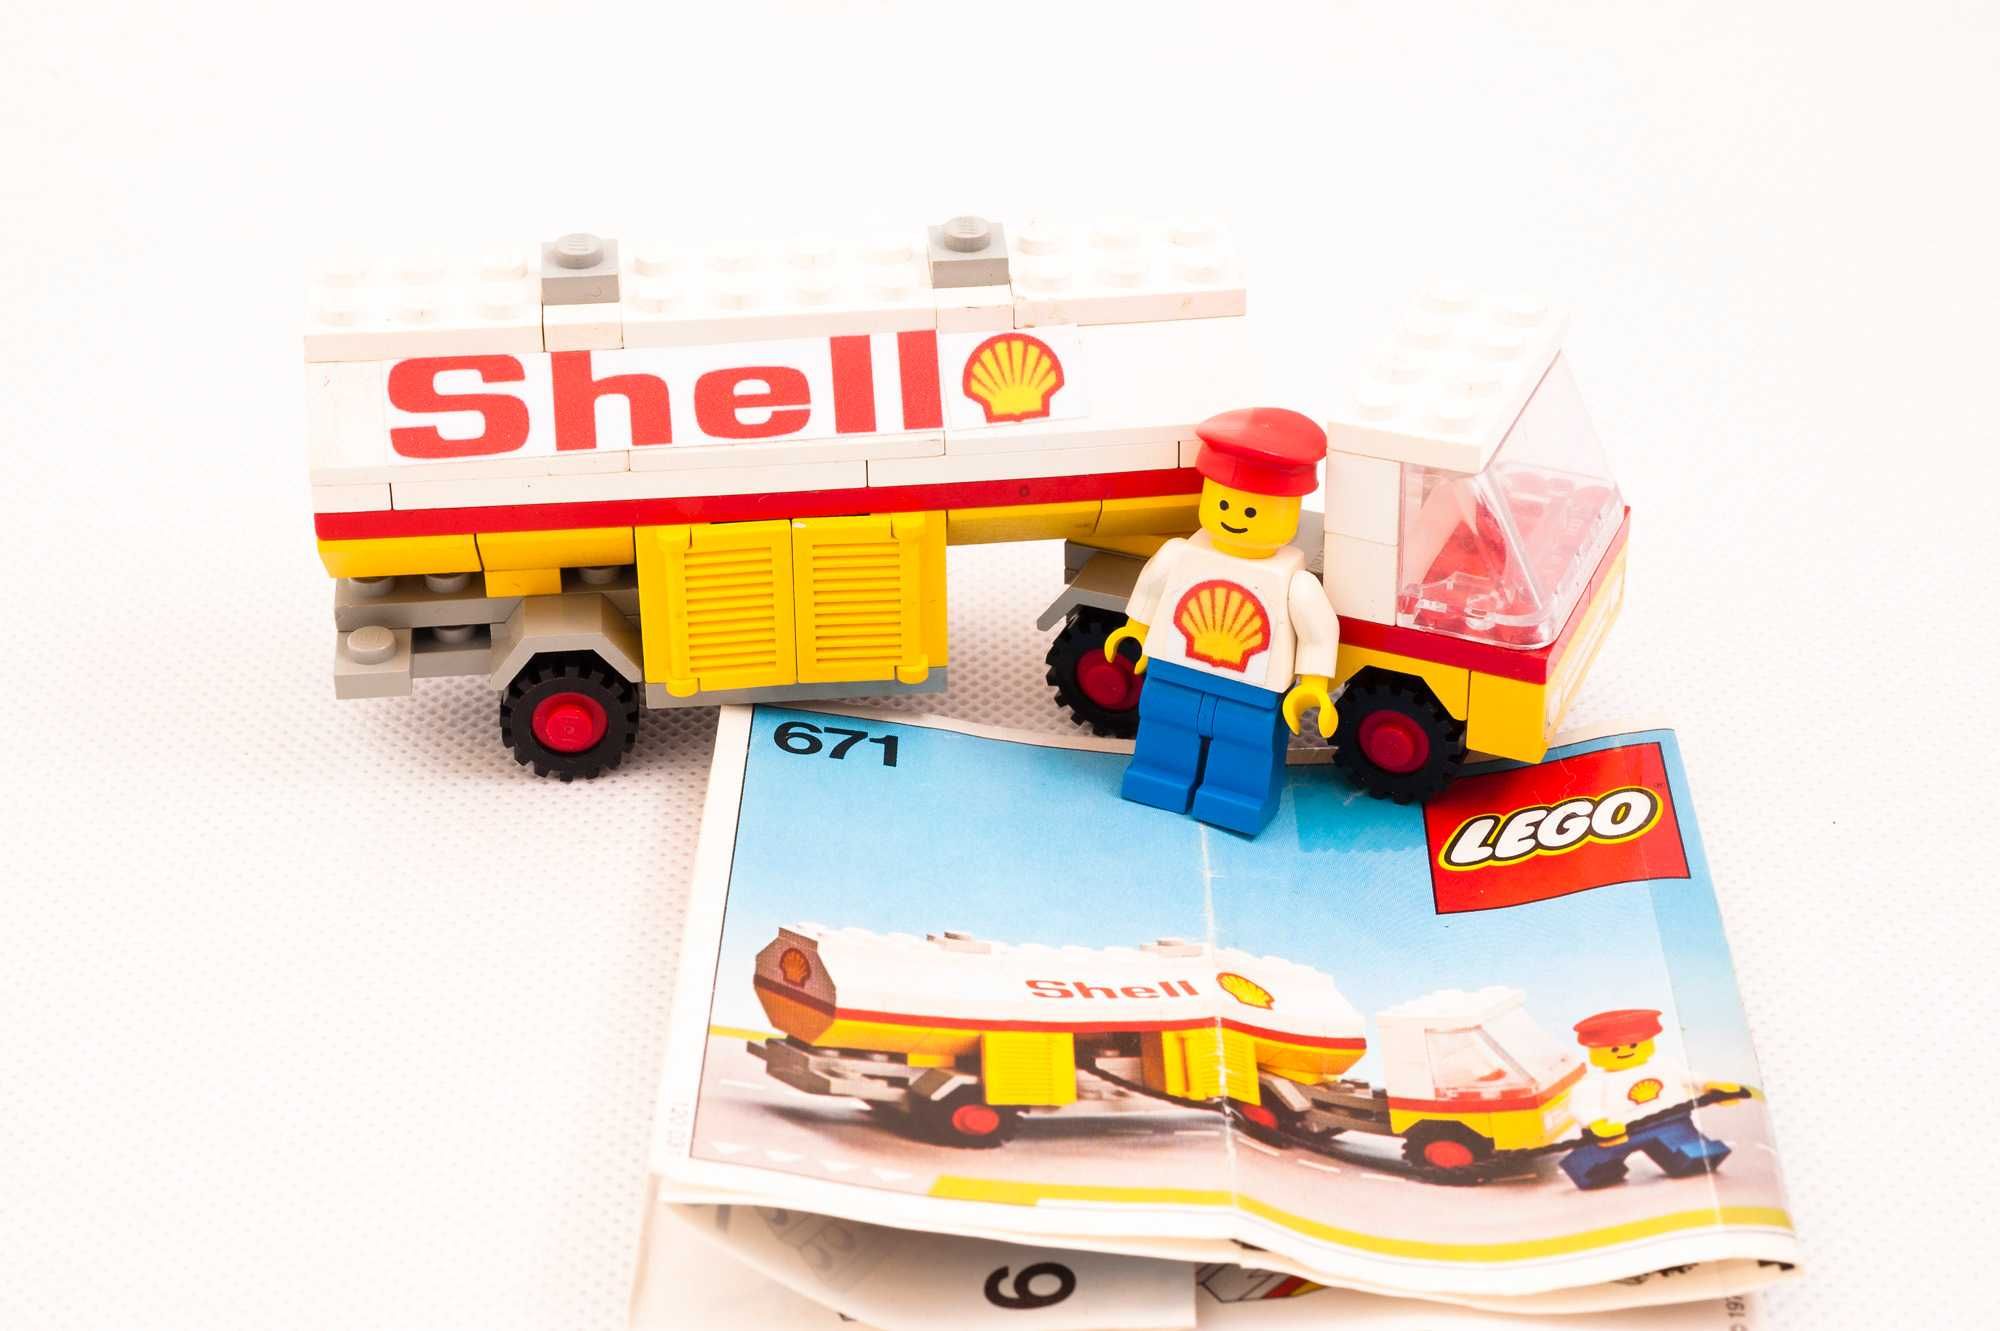 Lego 671 fuel punmper, Cysterna shell